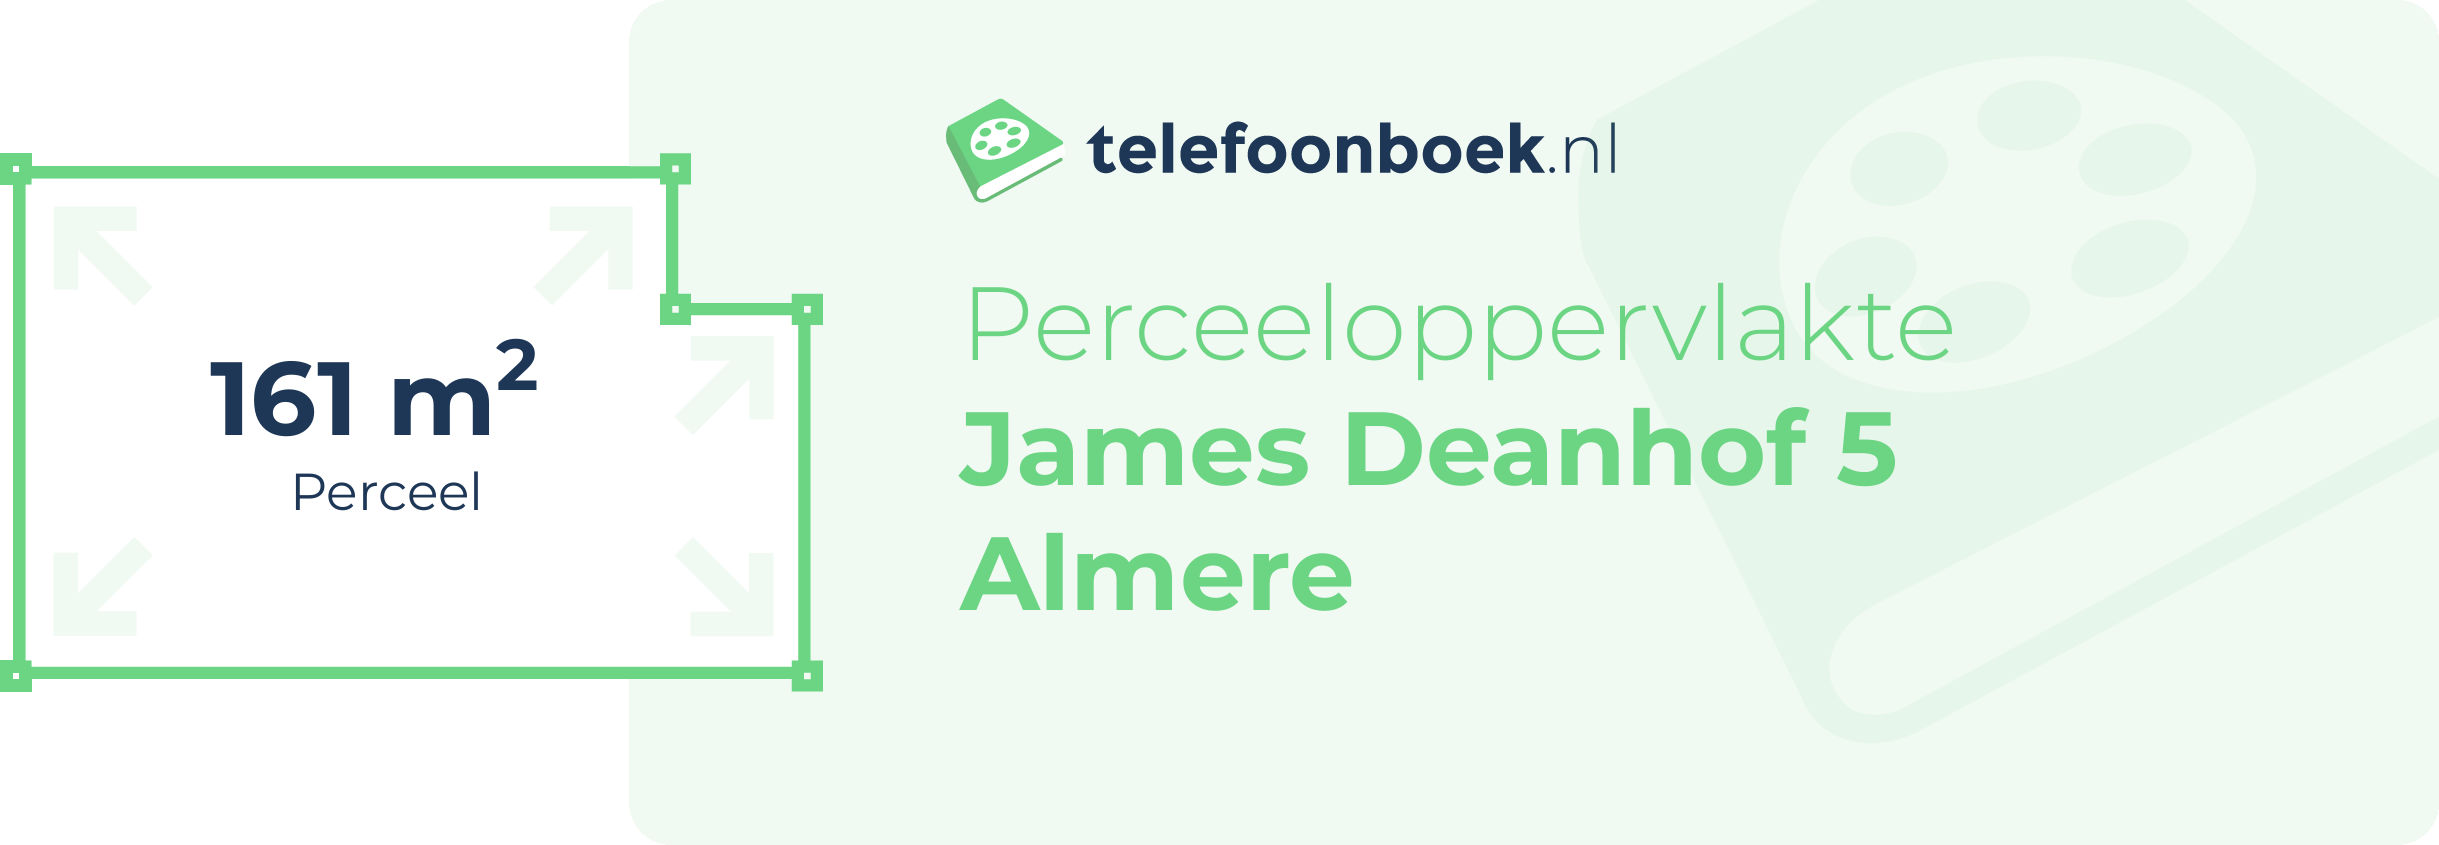 Perceeloppervlakte James Deanhof 5 Almere